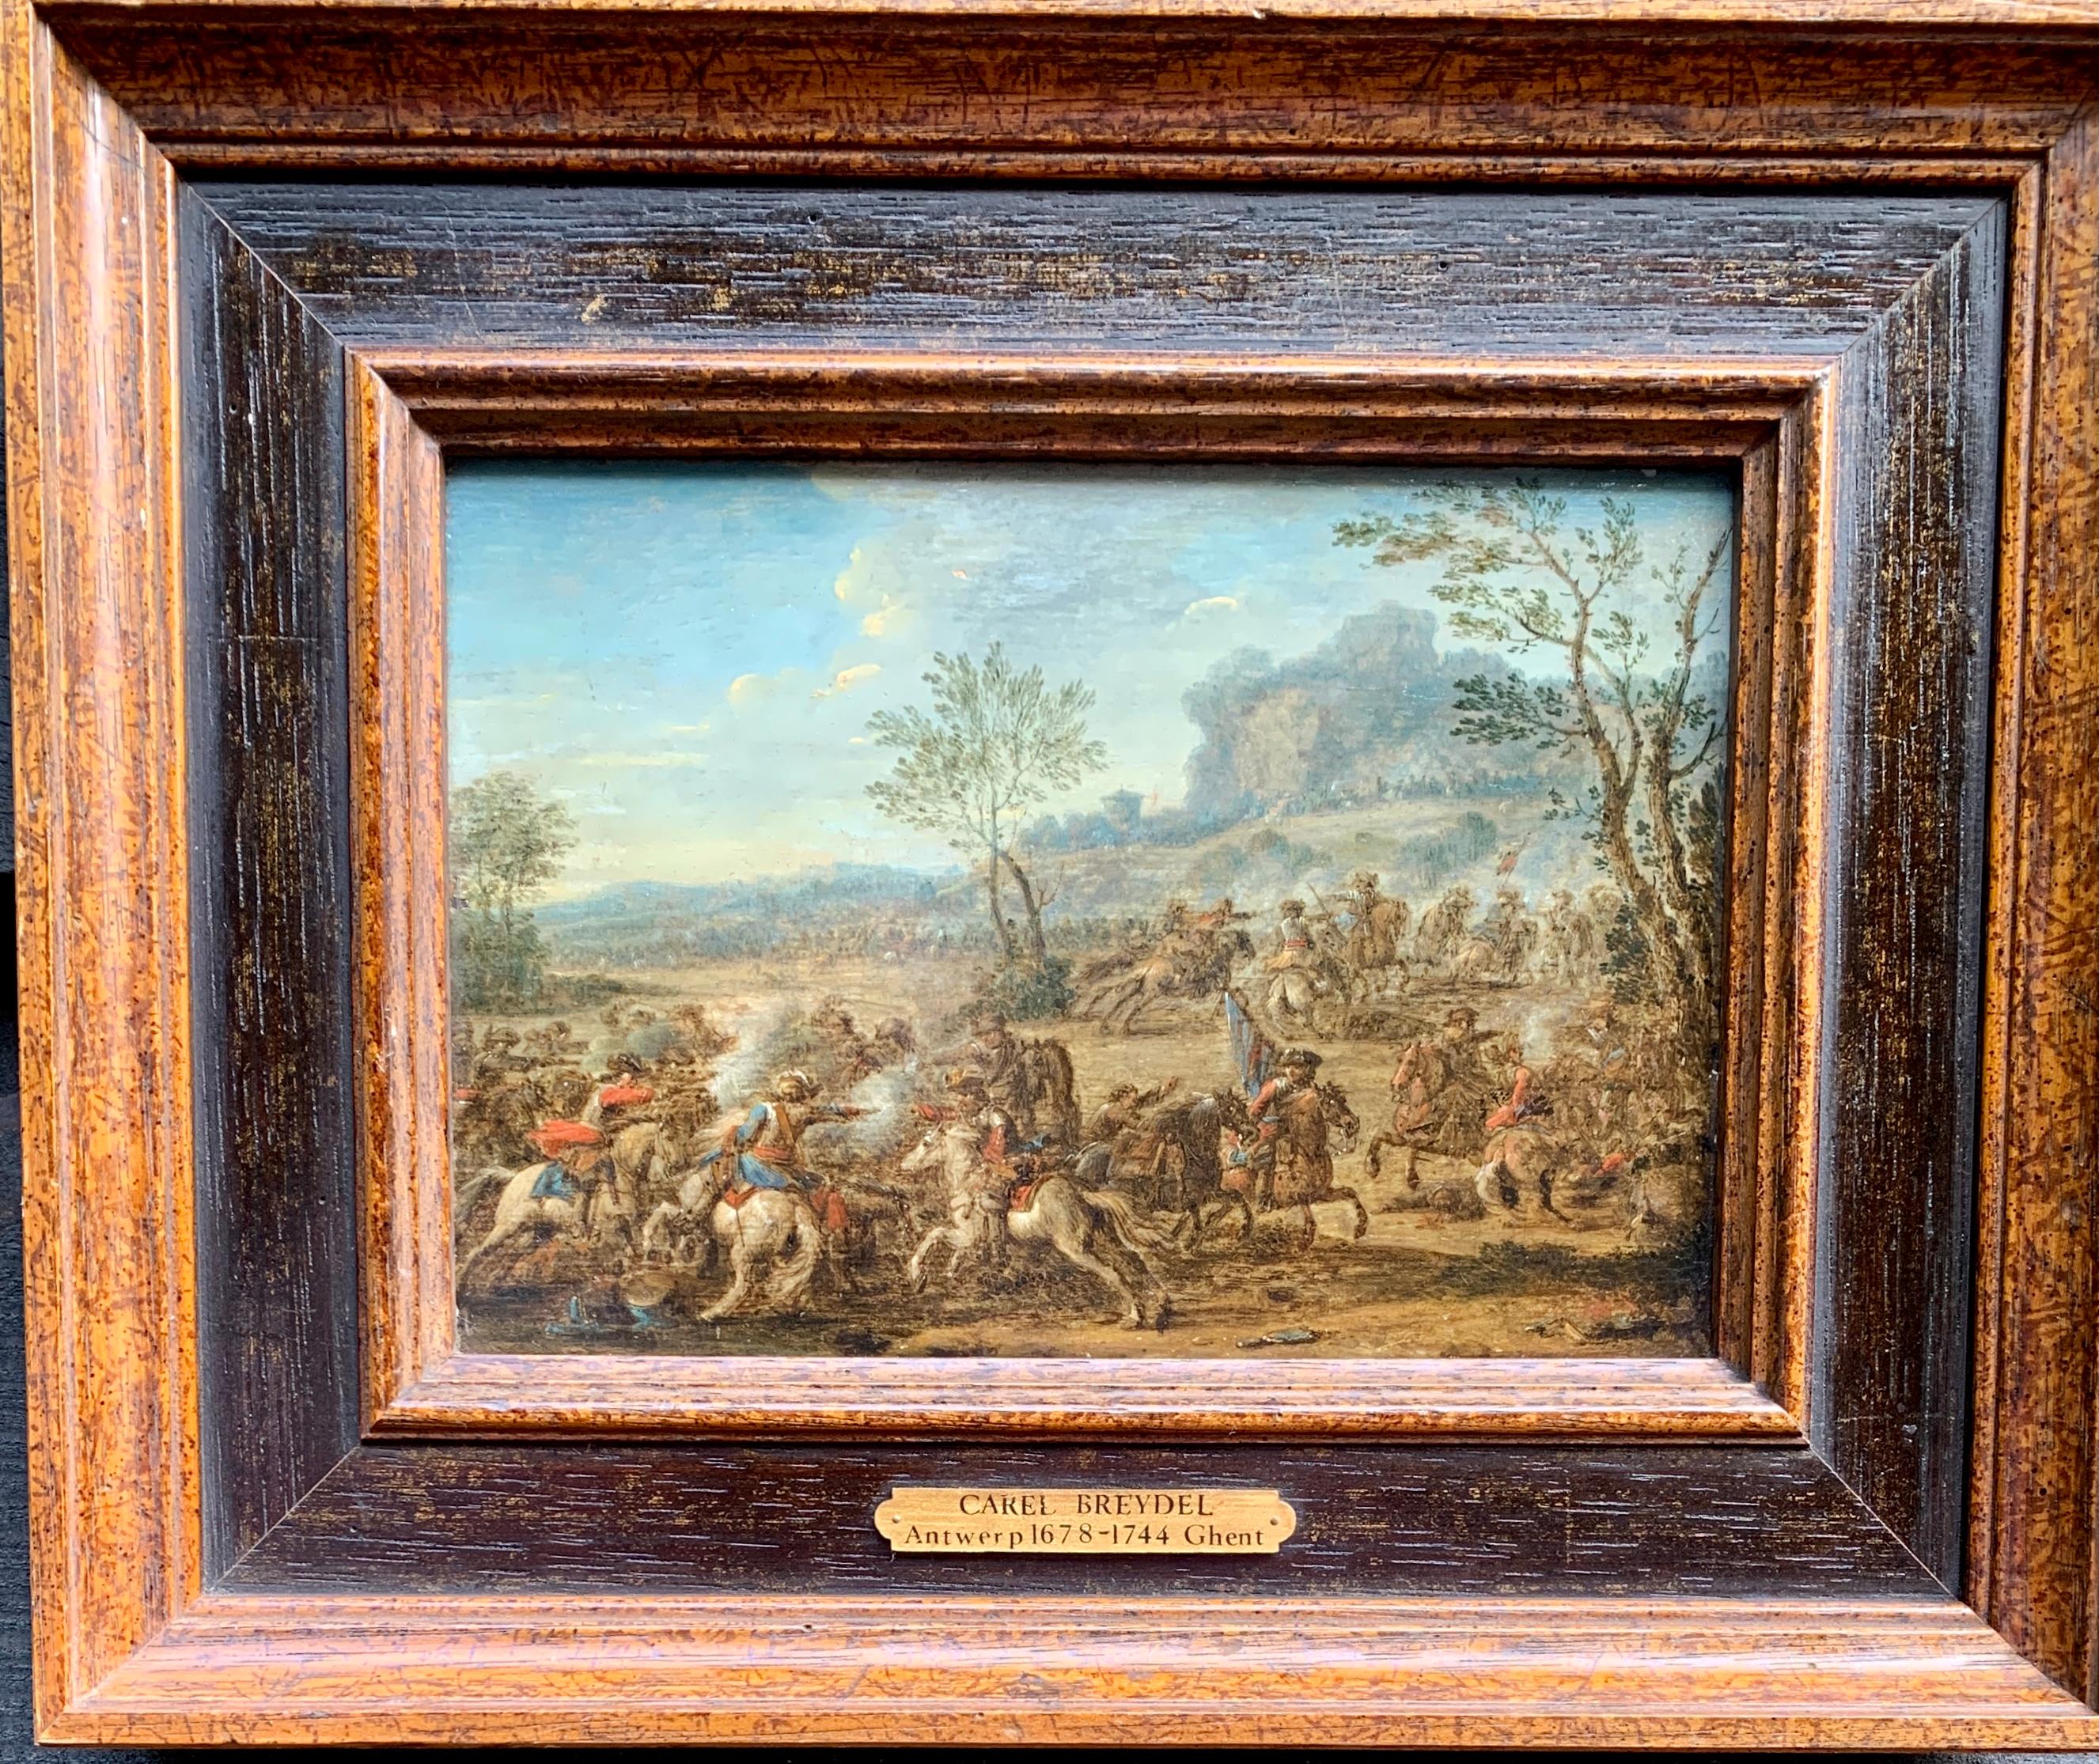 Karel Breydel Figurative Painting - Antique 17th or 18th century Dutch Men on horses in Battle in a landscape